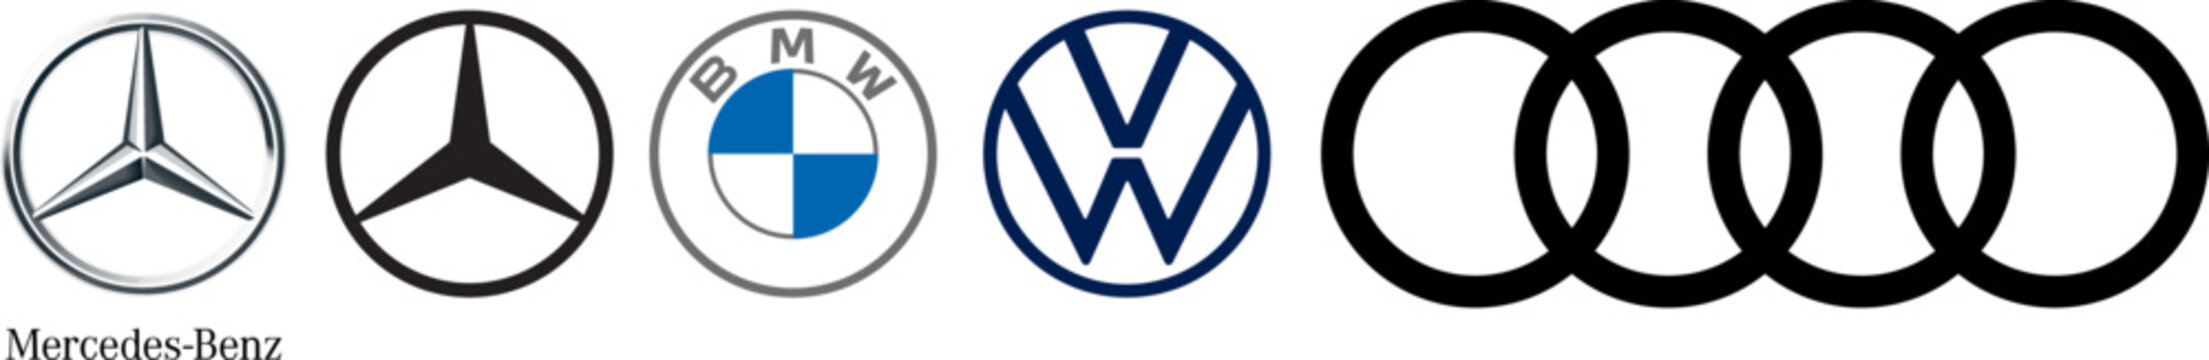 Mercedes car brand logo set. Mercedes-Benz AG, BMW, Audi, Volkswagen VW auto icons. Vector editorial illustration